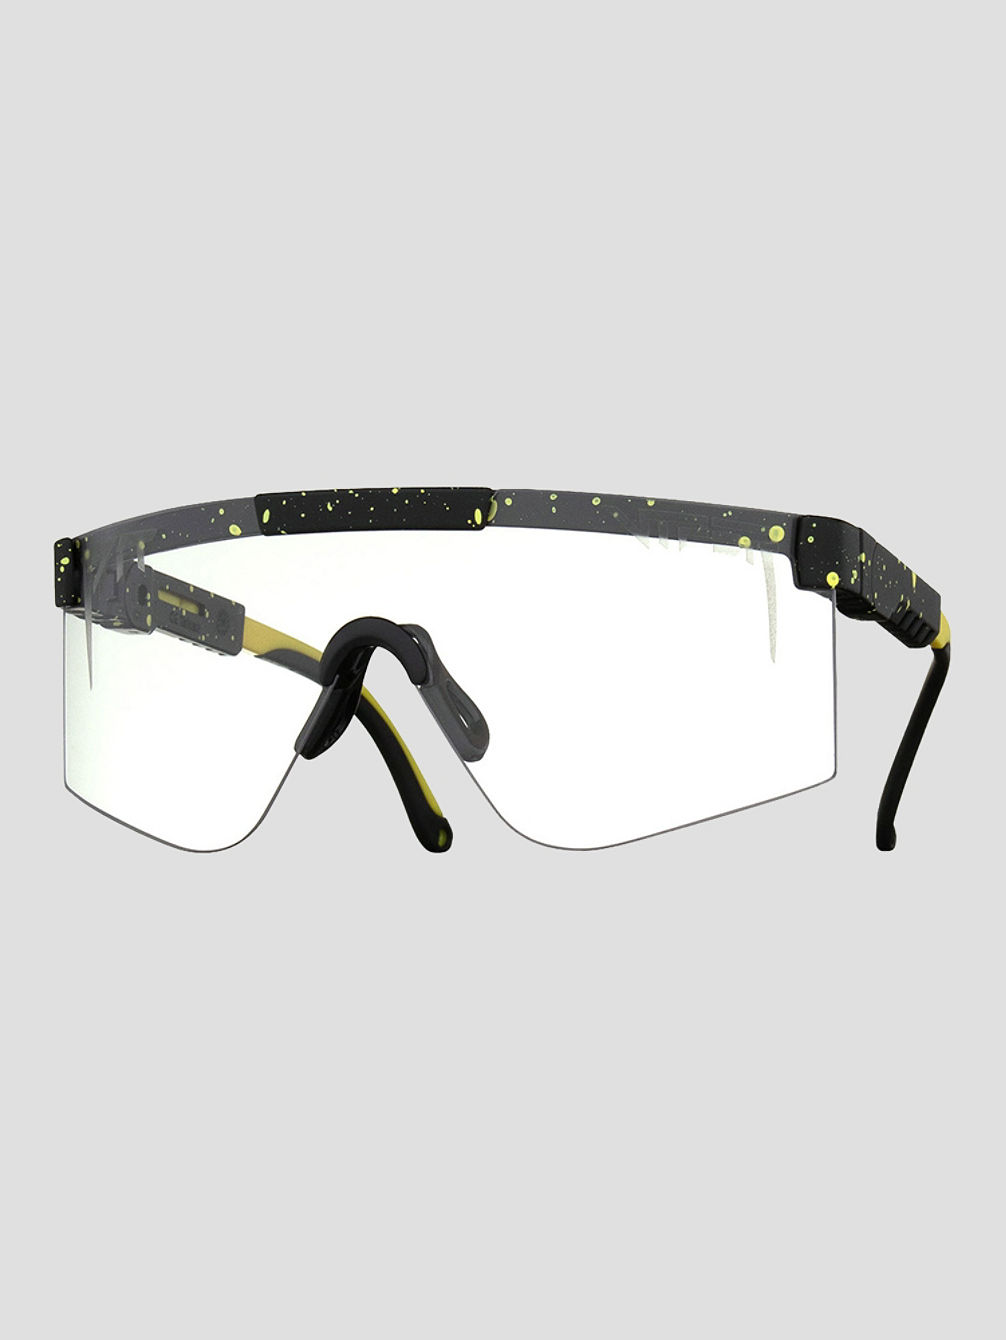 The 2000s Photochromic Cosmos Sunglasses